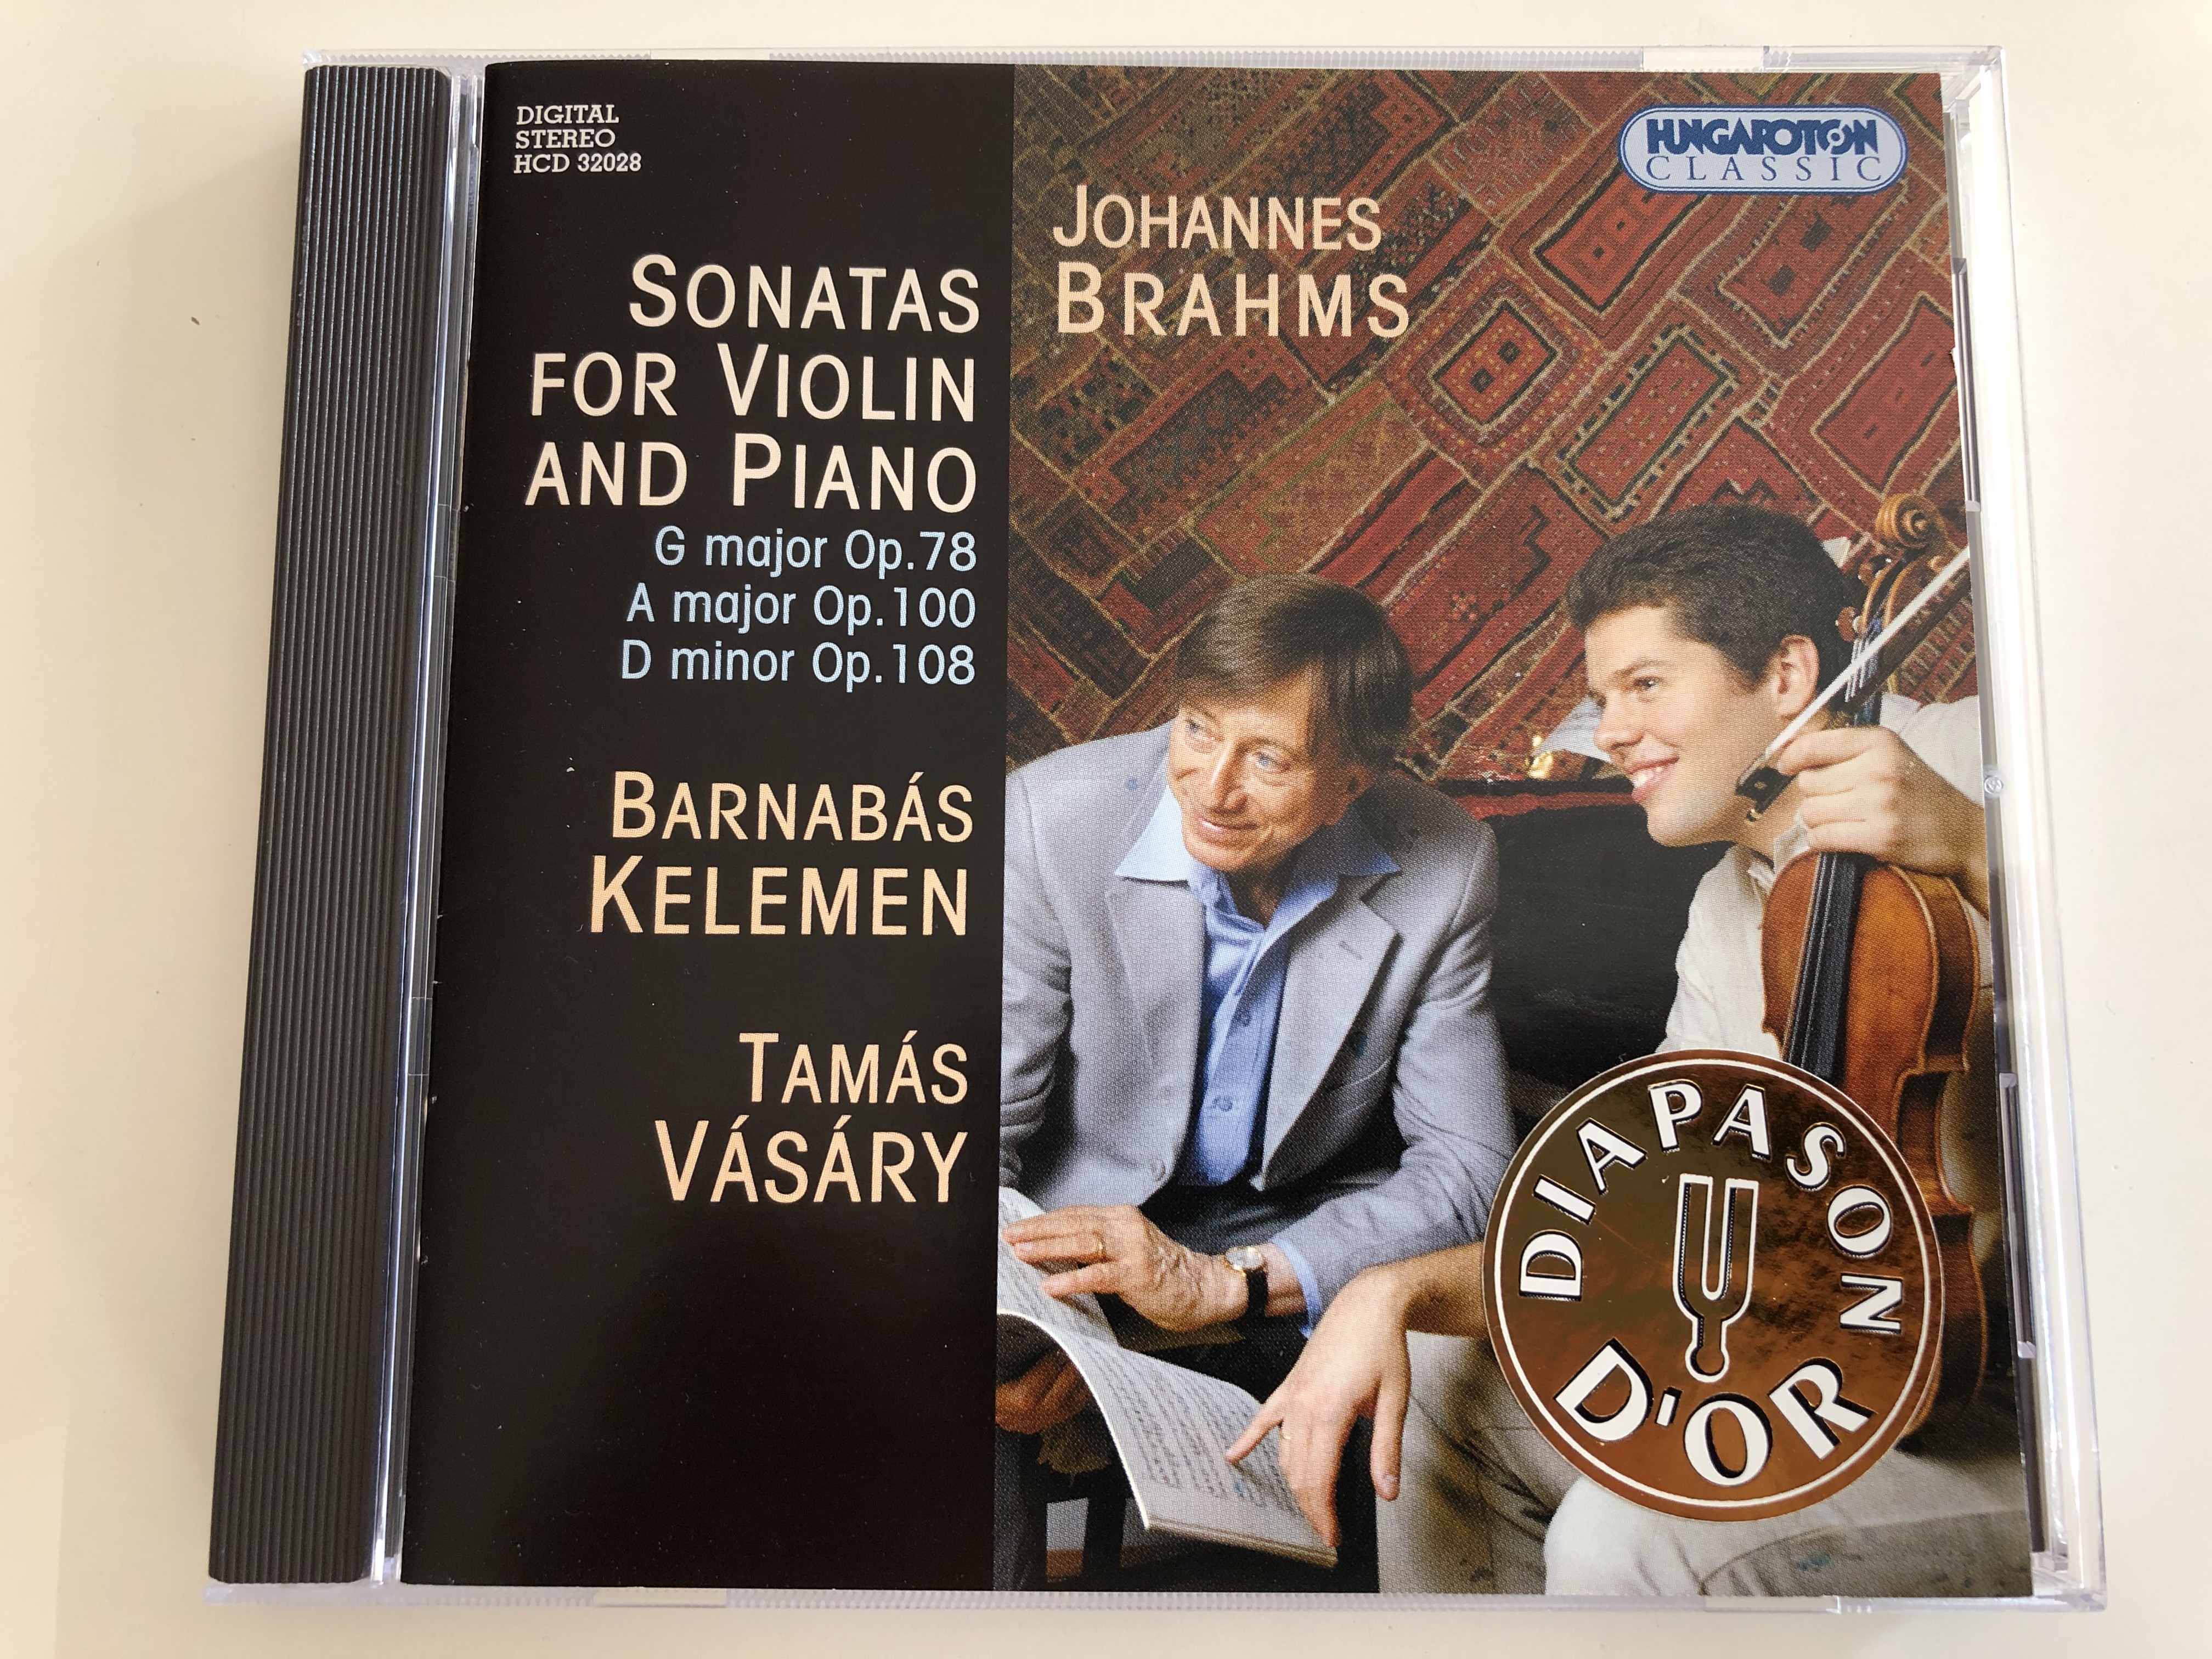 johannes-brahms-sonatas-for-violin-and-piano-g-major-op.78-a-major-op.100-d-minor-op.108-barnabas-kelemen-tamas-vasary-hungaroton-classic-audio-cd-2002-stereo-hcd-32028-1-.jpg